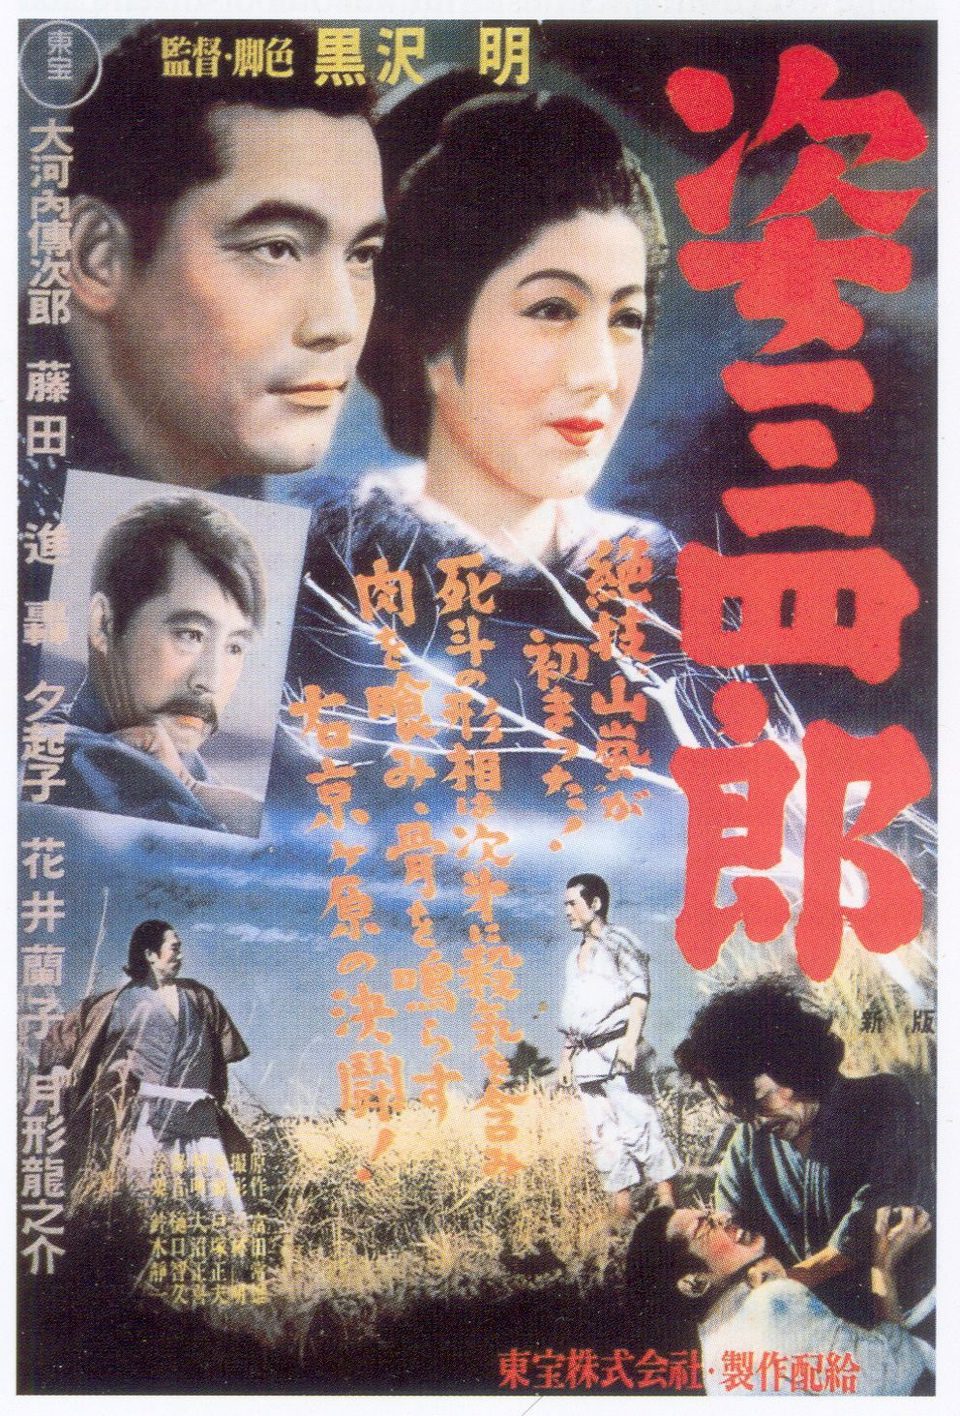 Poster of Sanshiro Sugata - Japon